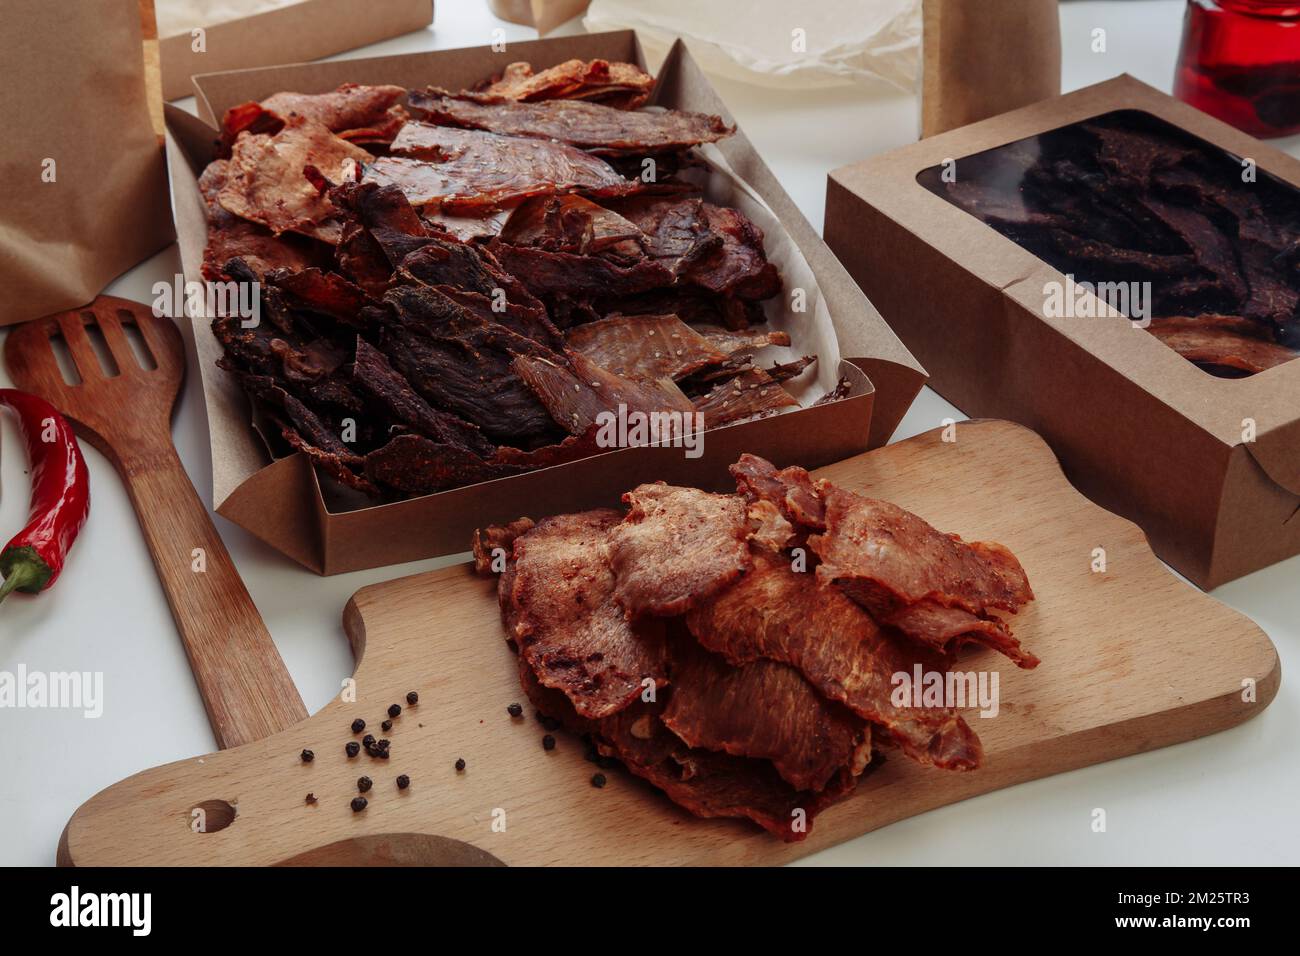 Carne seca hecha en casa fotografías e imágenes de alta resolución - Alamy